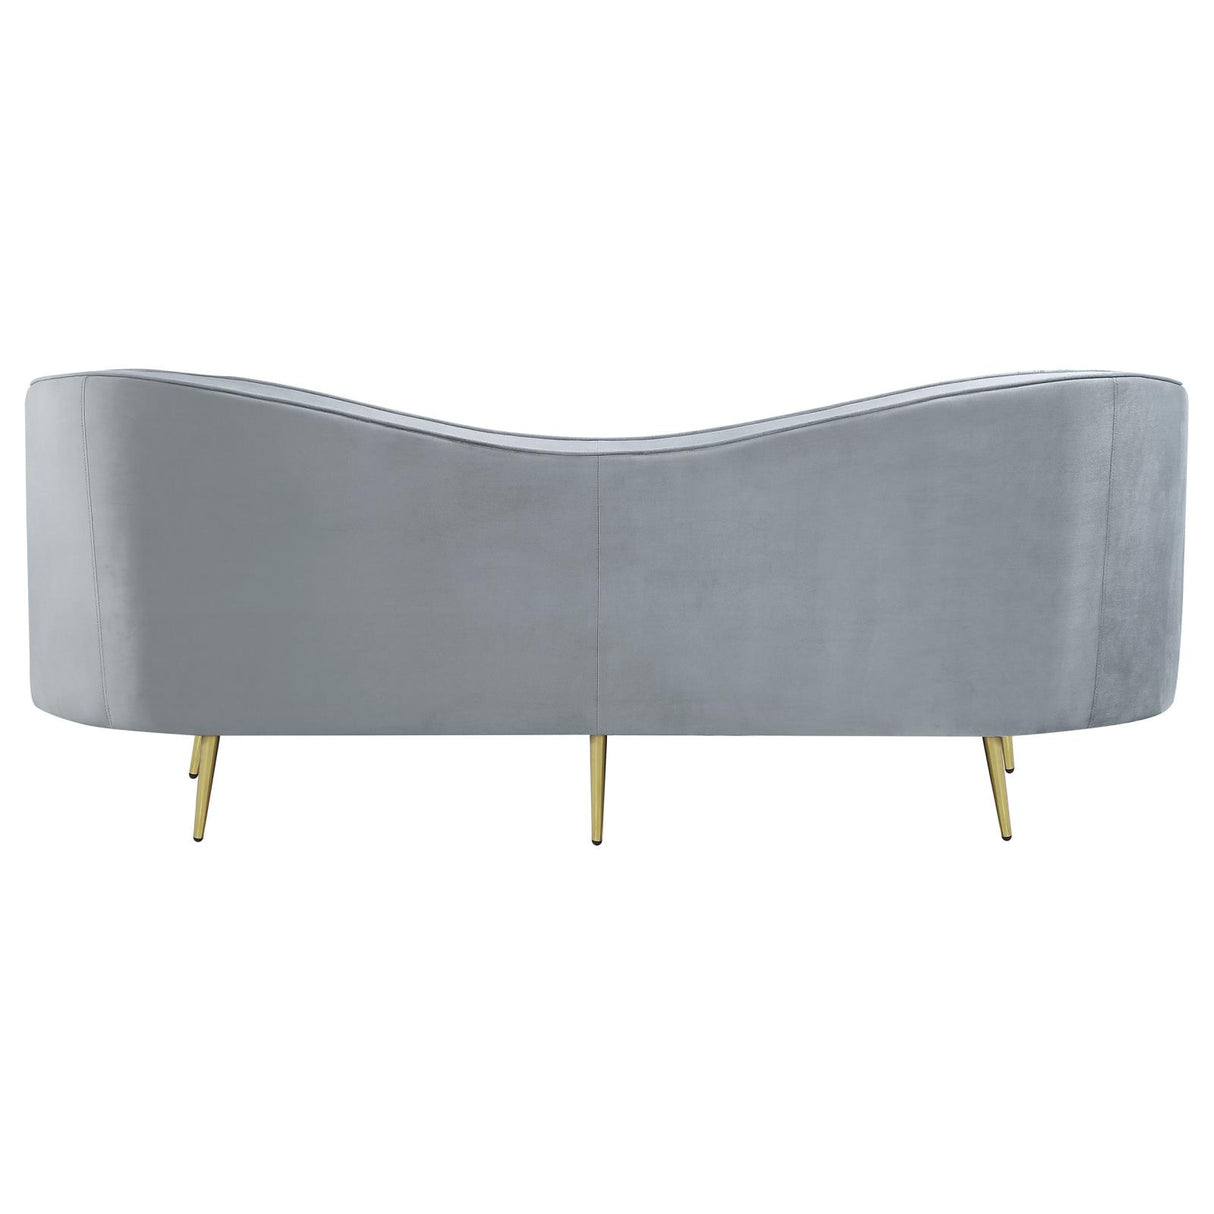 Sophia 2-piece Upholstered Living Room Set with Camel Back Grey and Gold - 506864-S2 - Luna Furniture